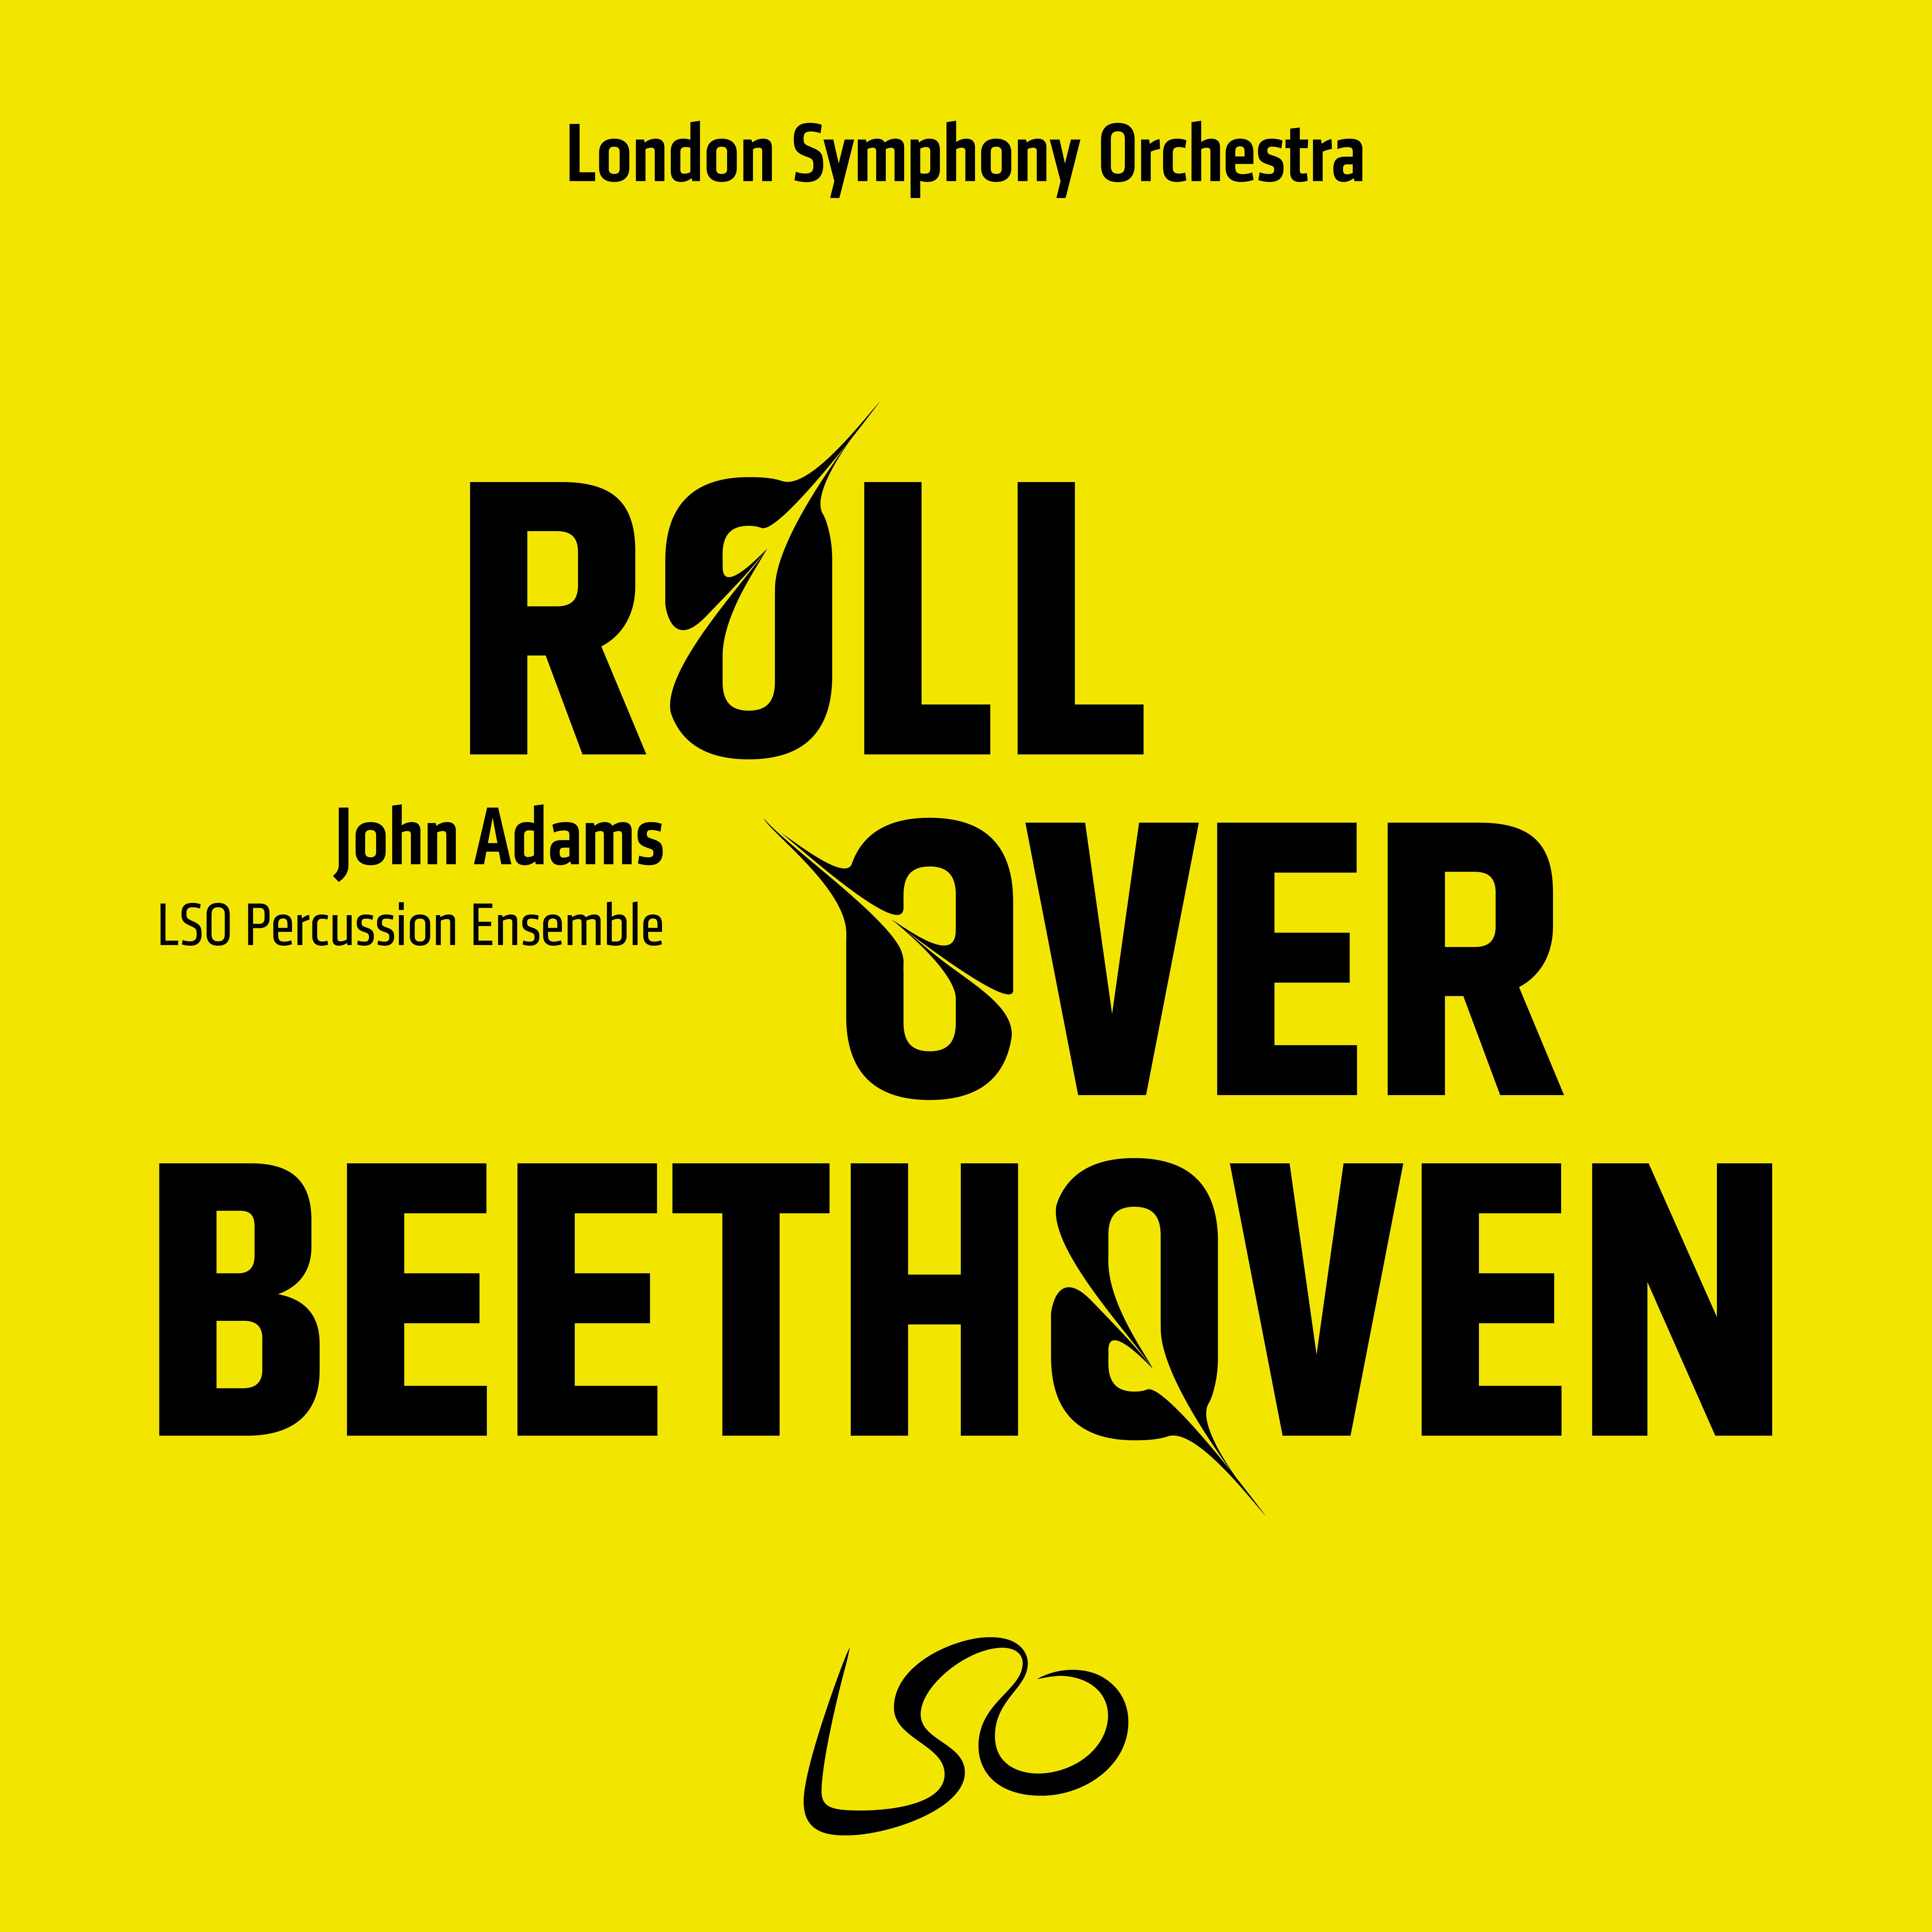 Roll Over Beethoven: I. Allegro molto